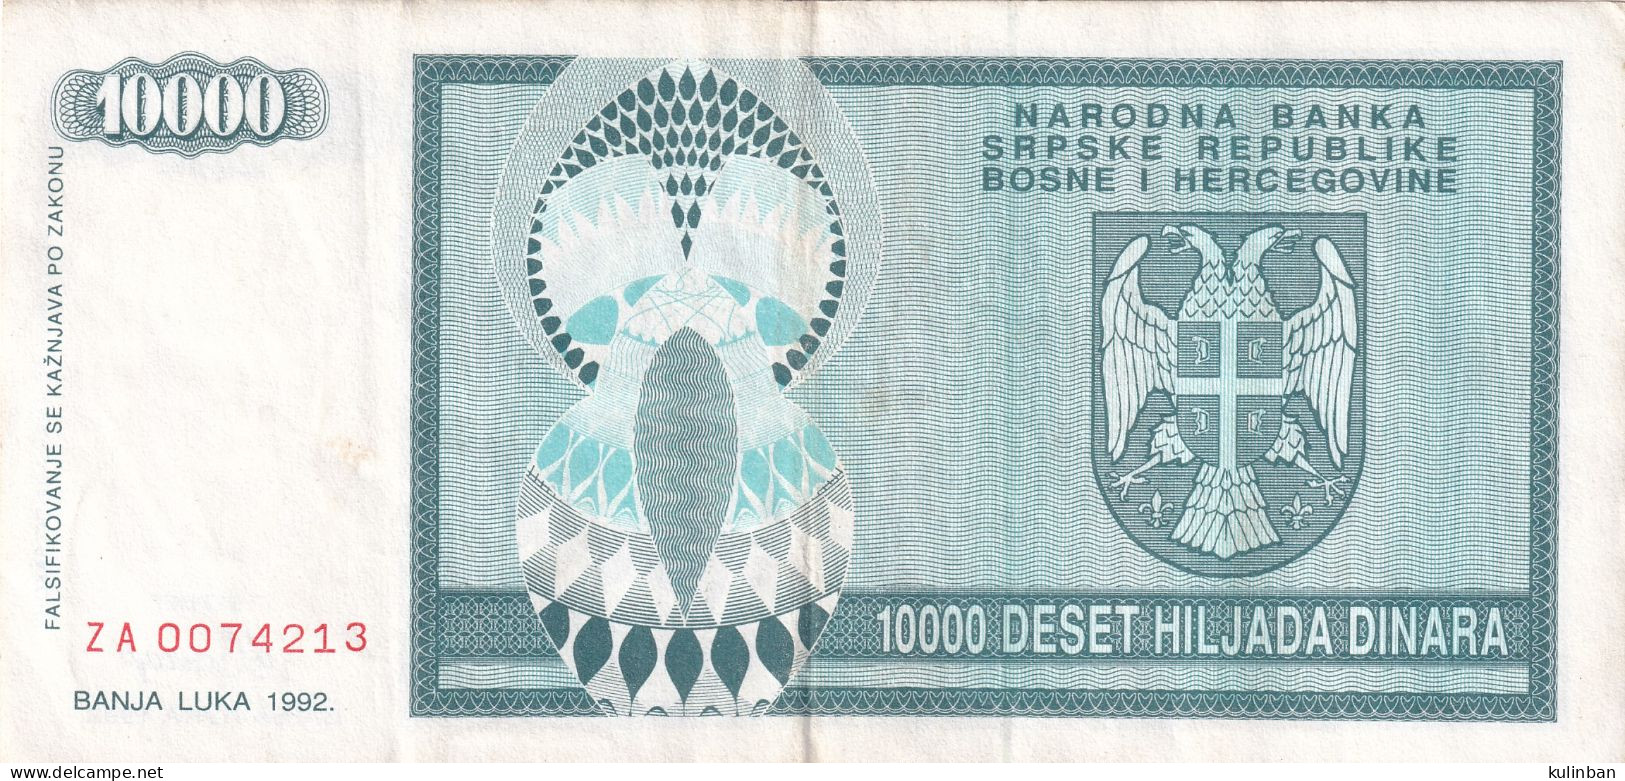 BOSNIA AND HERZEGOVINA, Replacement Banknote, ZA 0074213. P-139d,VF, 10.000 DINARA,  BANJA LUKA 1992. - Bosnia And Herzegovina